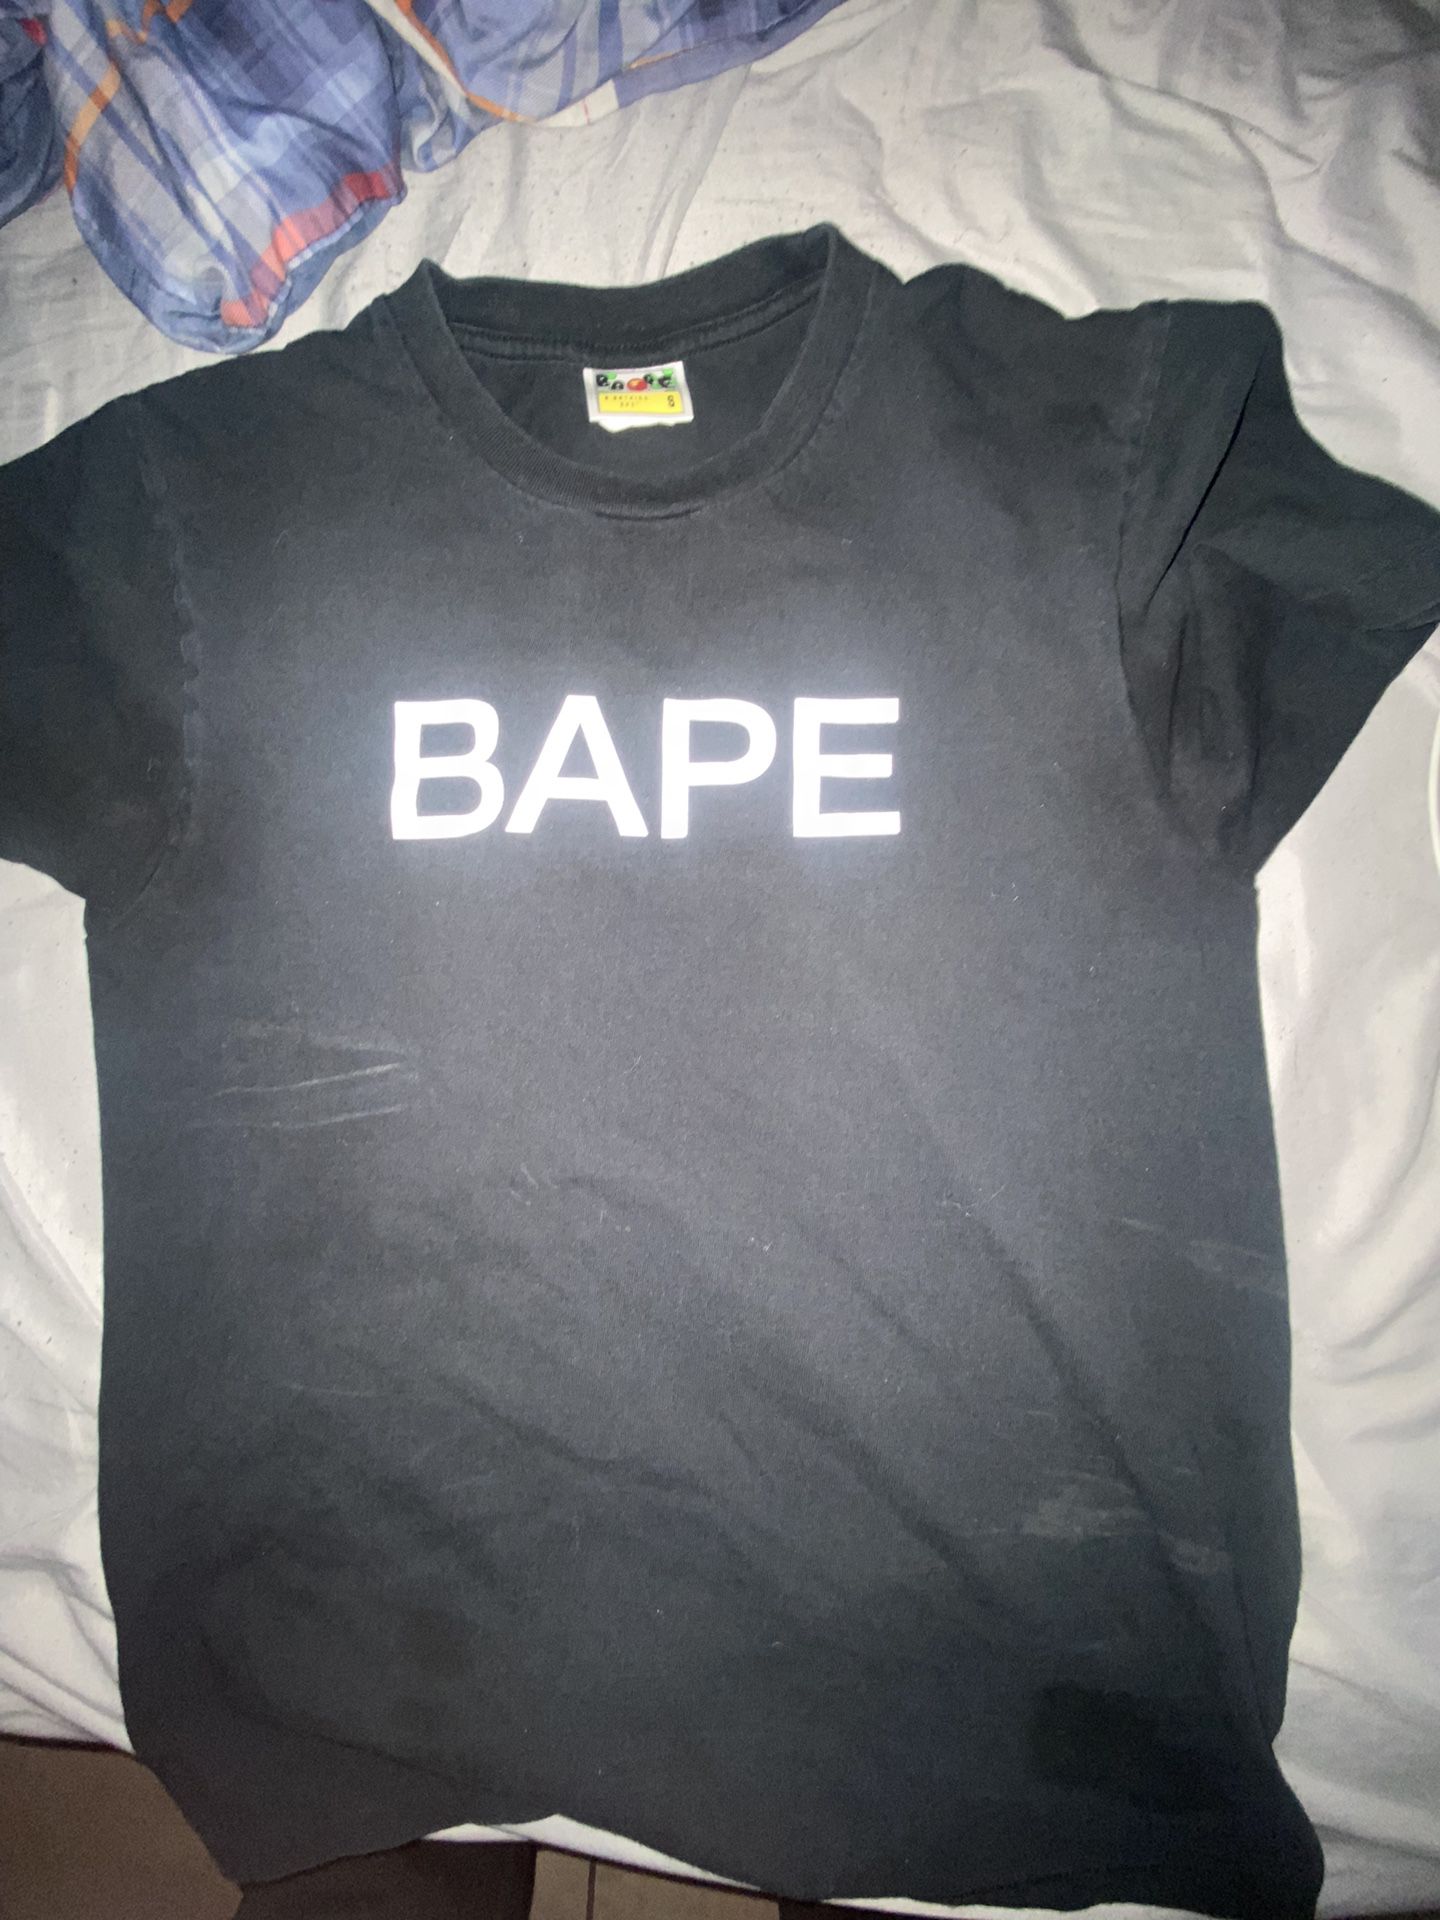 A Bathing Ape “BAPE” shirt Men’s Small